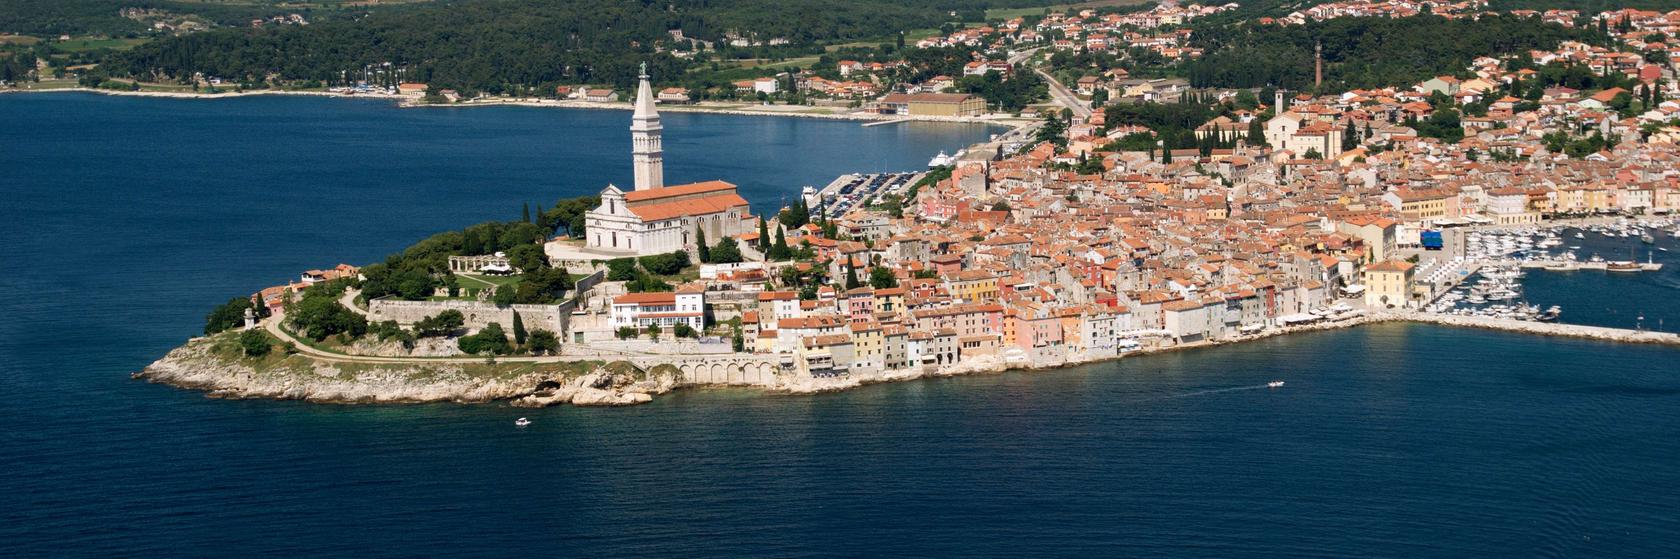 Tipy na výlety na Istrii